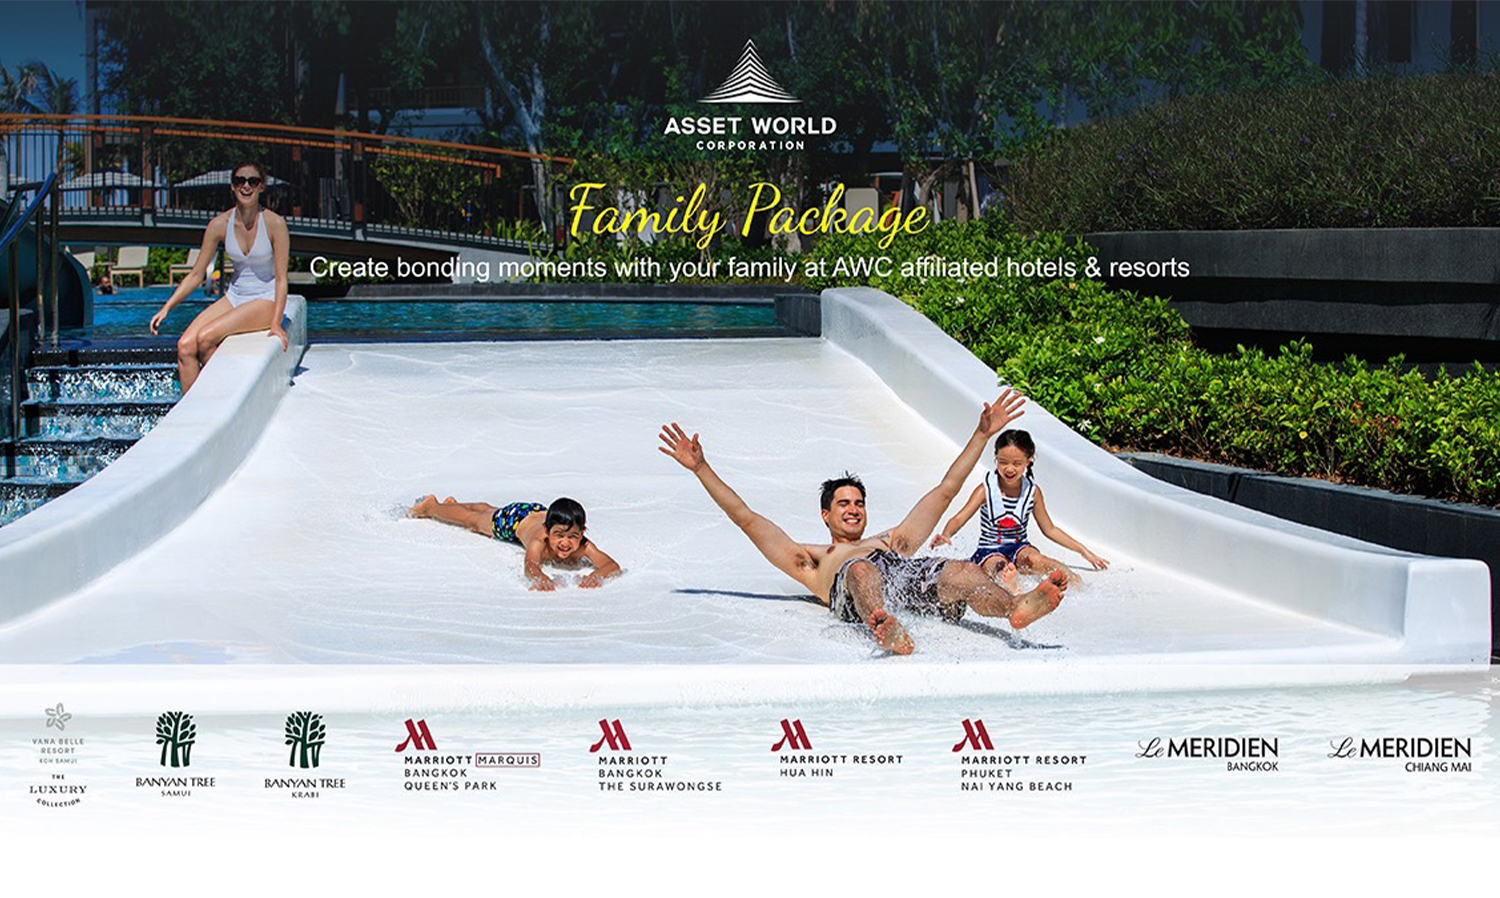 AWC นำเสนอ “Family Package” โปรโมชั่นสุดพิเศษสำหรับครอบครัว จากโรงแรมและรีสอร์ทในเครือใน 6 แหล่งท่องเที่ยวสำคัญทั่วประเทศไทย